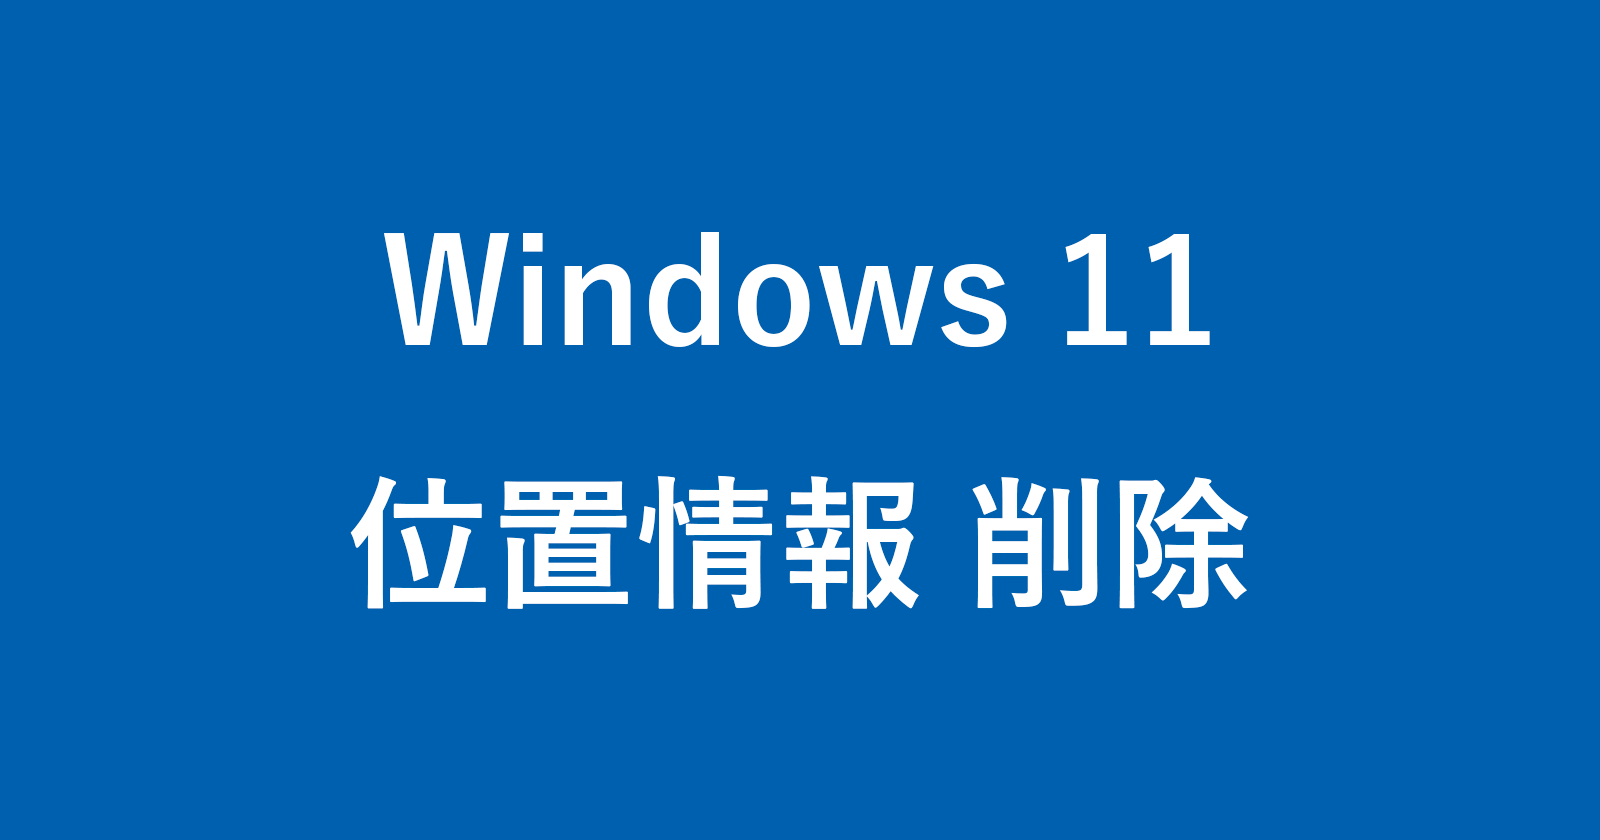 windows 11 location clear